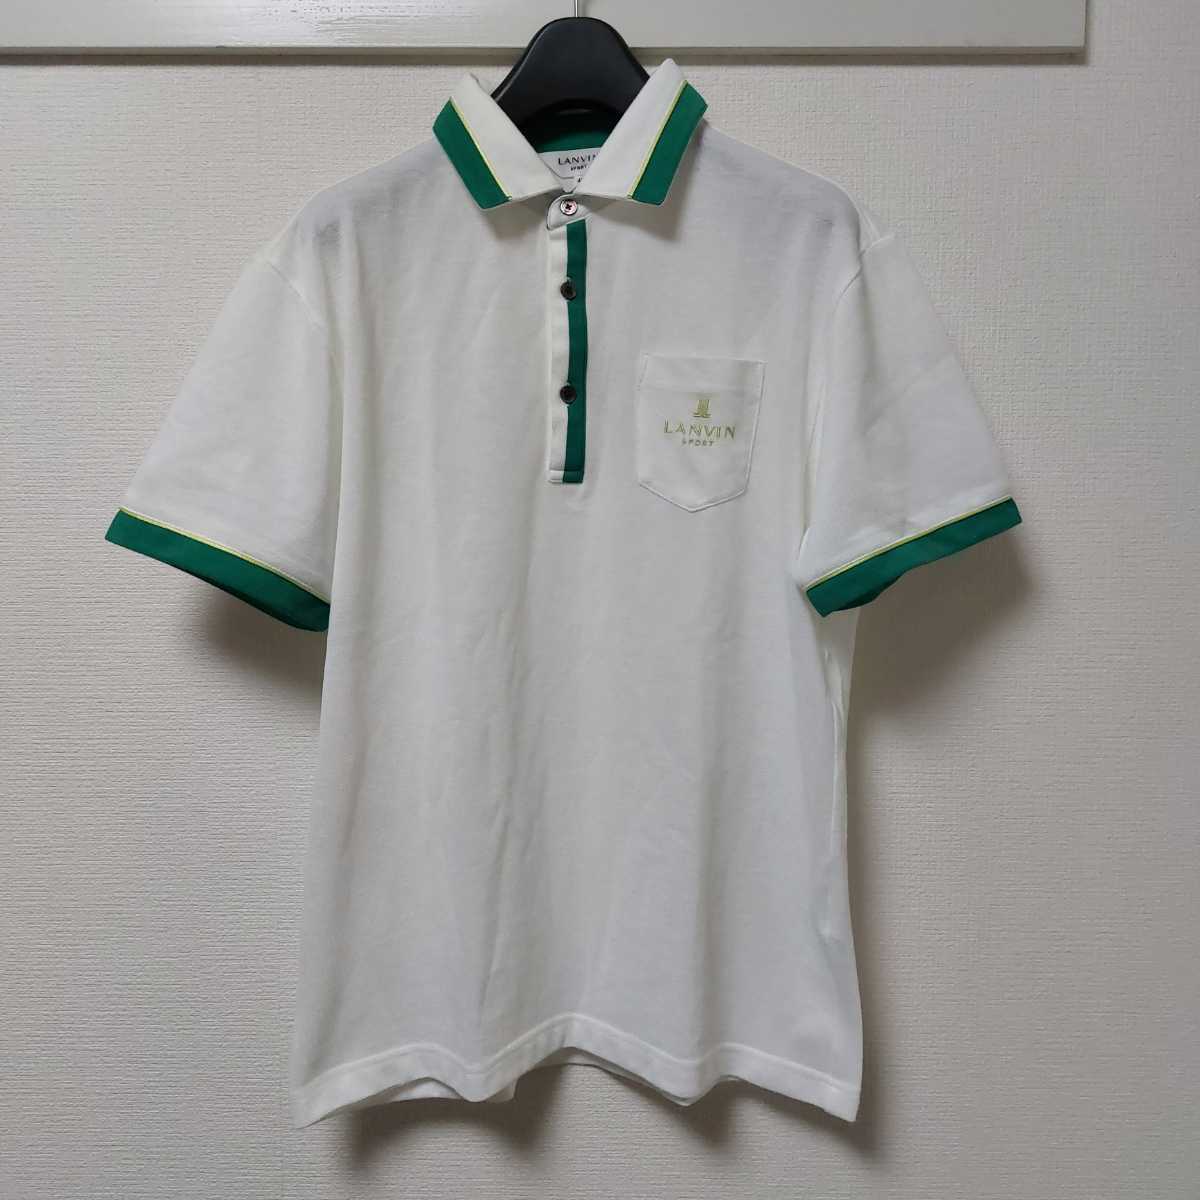  LANVIN SPORT 半袖ポロシャツ 40 L ホワイト 白 グリーン 緑 胸 刺繍 ポケット ランバン ゴルフ メンズ デサント 日本製 正規品 04D2304_画像1